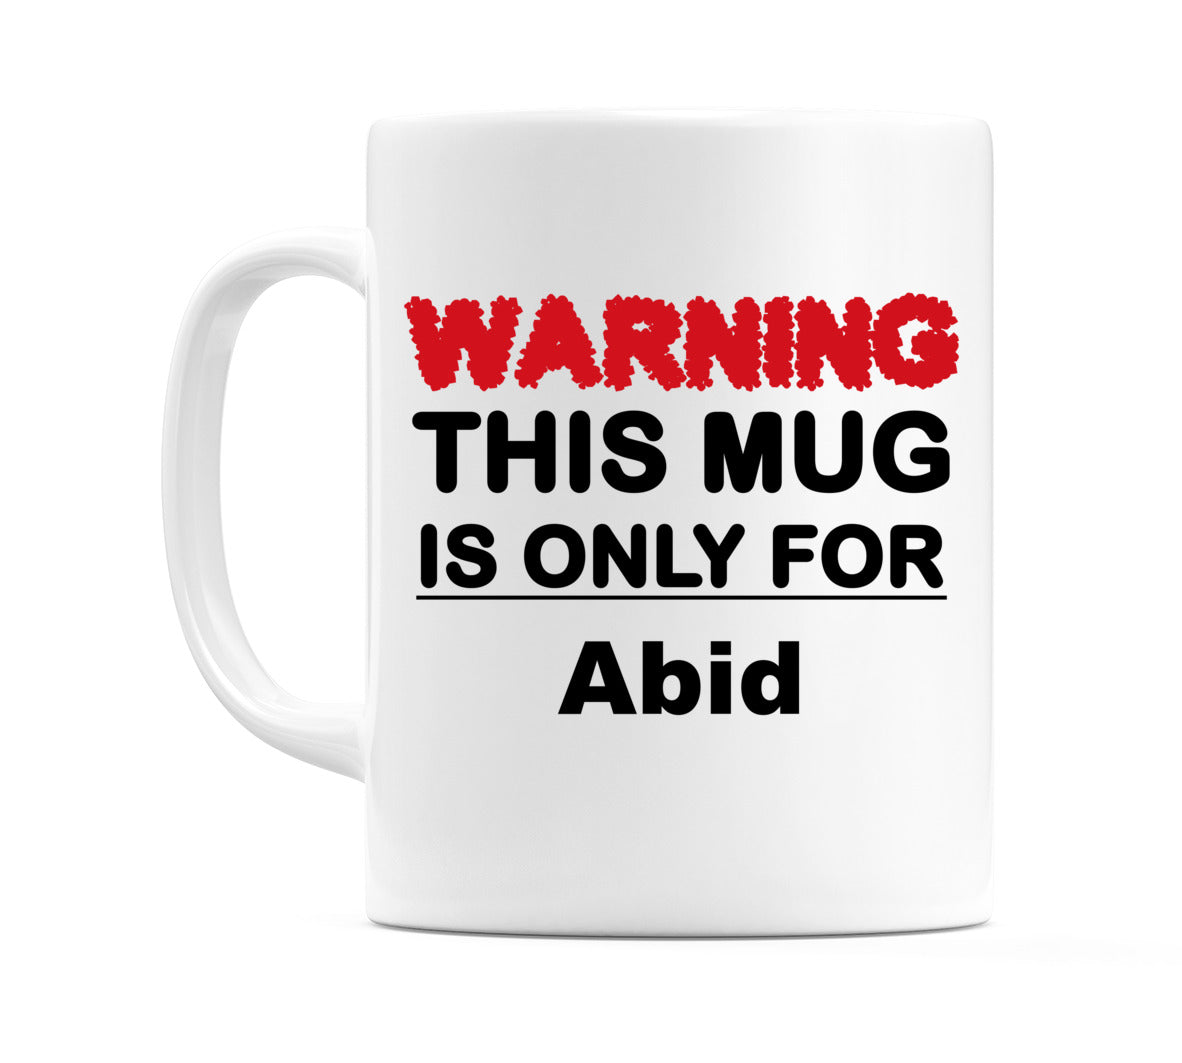 Warning This Mug is ONLY for Abid Mug